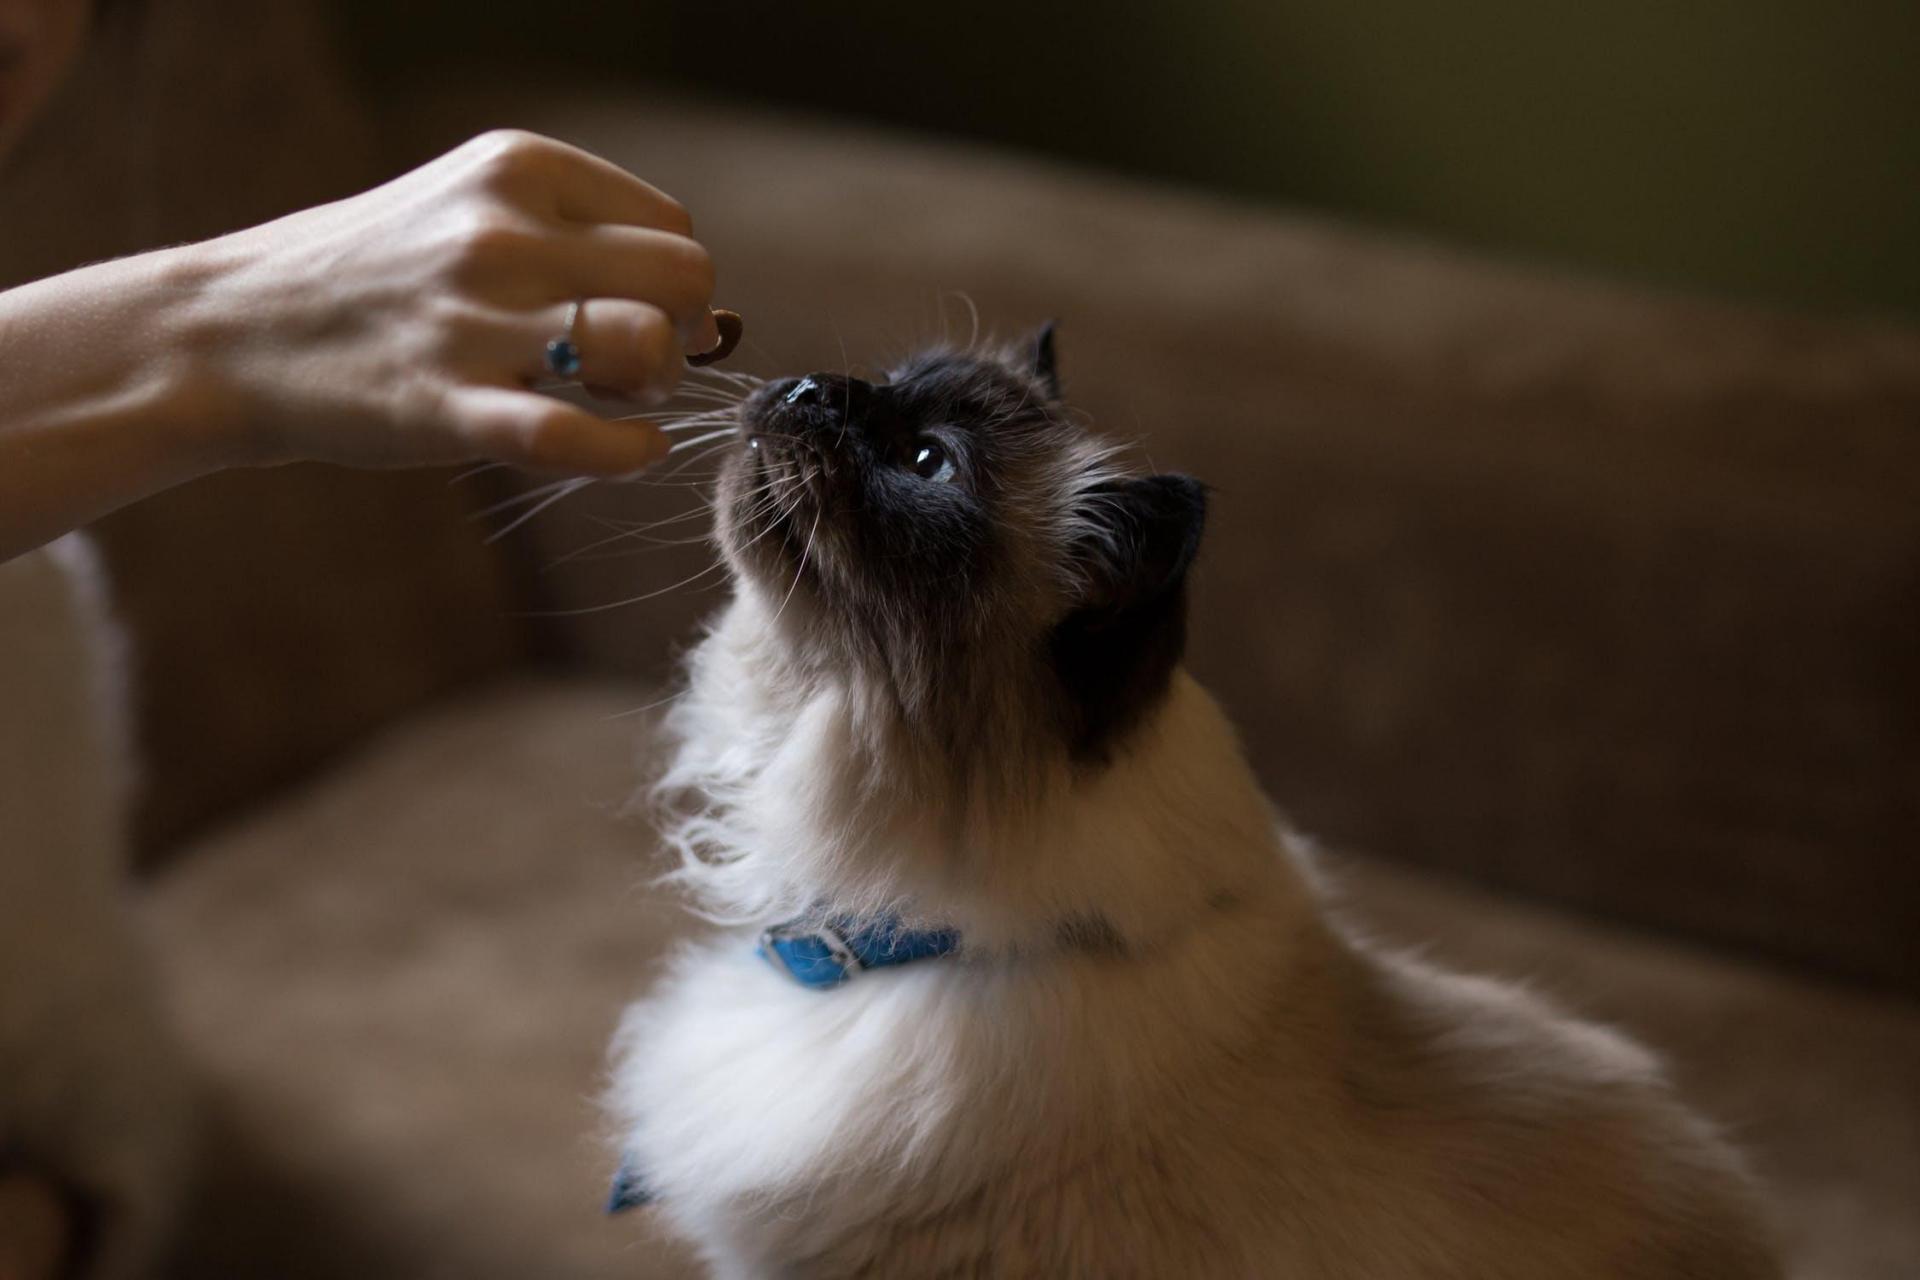 tro på Distribuere Joke Hvordan skal min kat fodres | Kattens værn